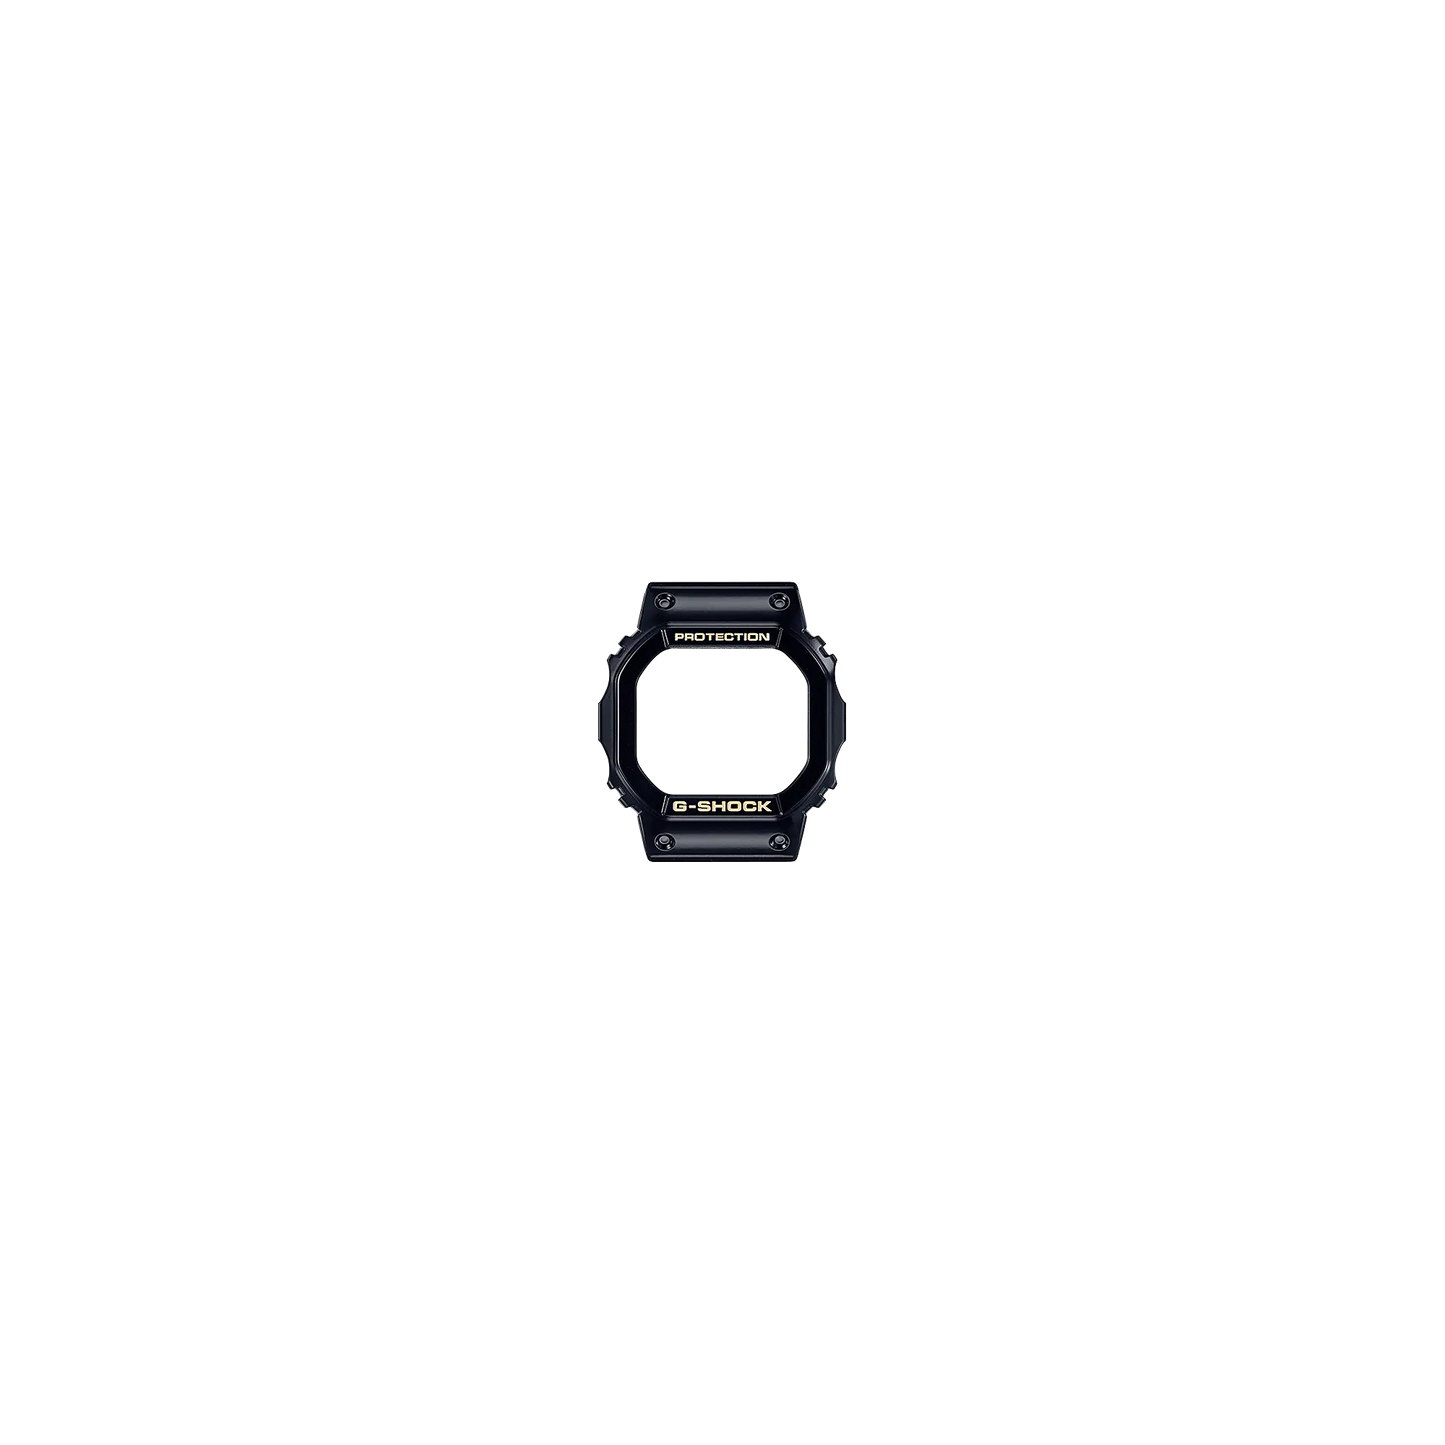 Casio G-Shock Hip Hop Gold Chain Watch With Interchangeable straps DWE-5600HG-1